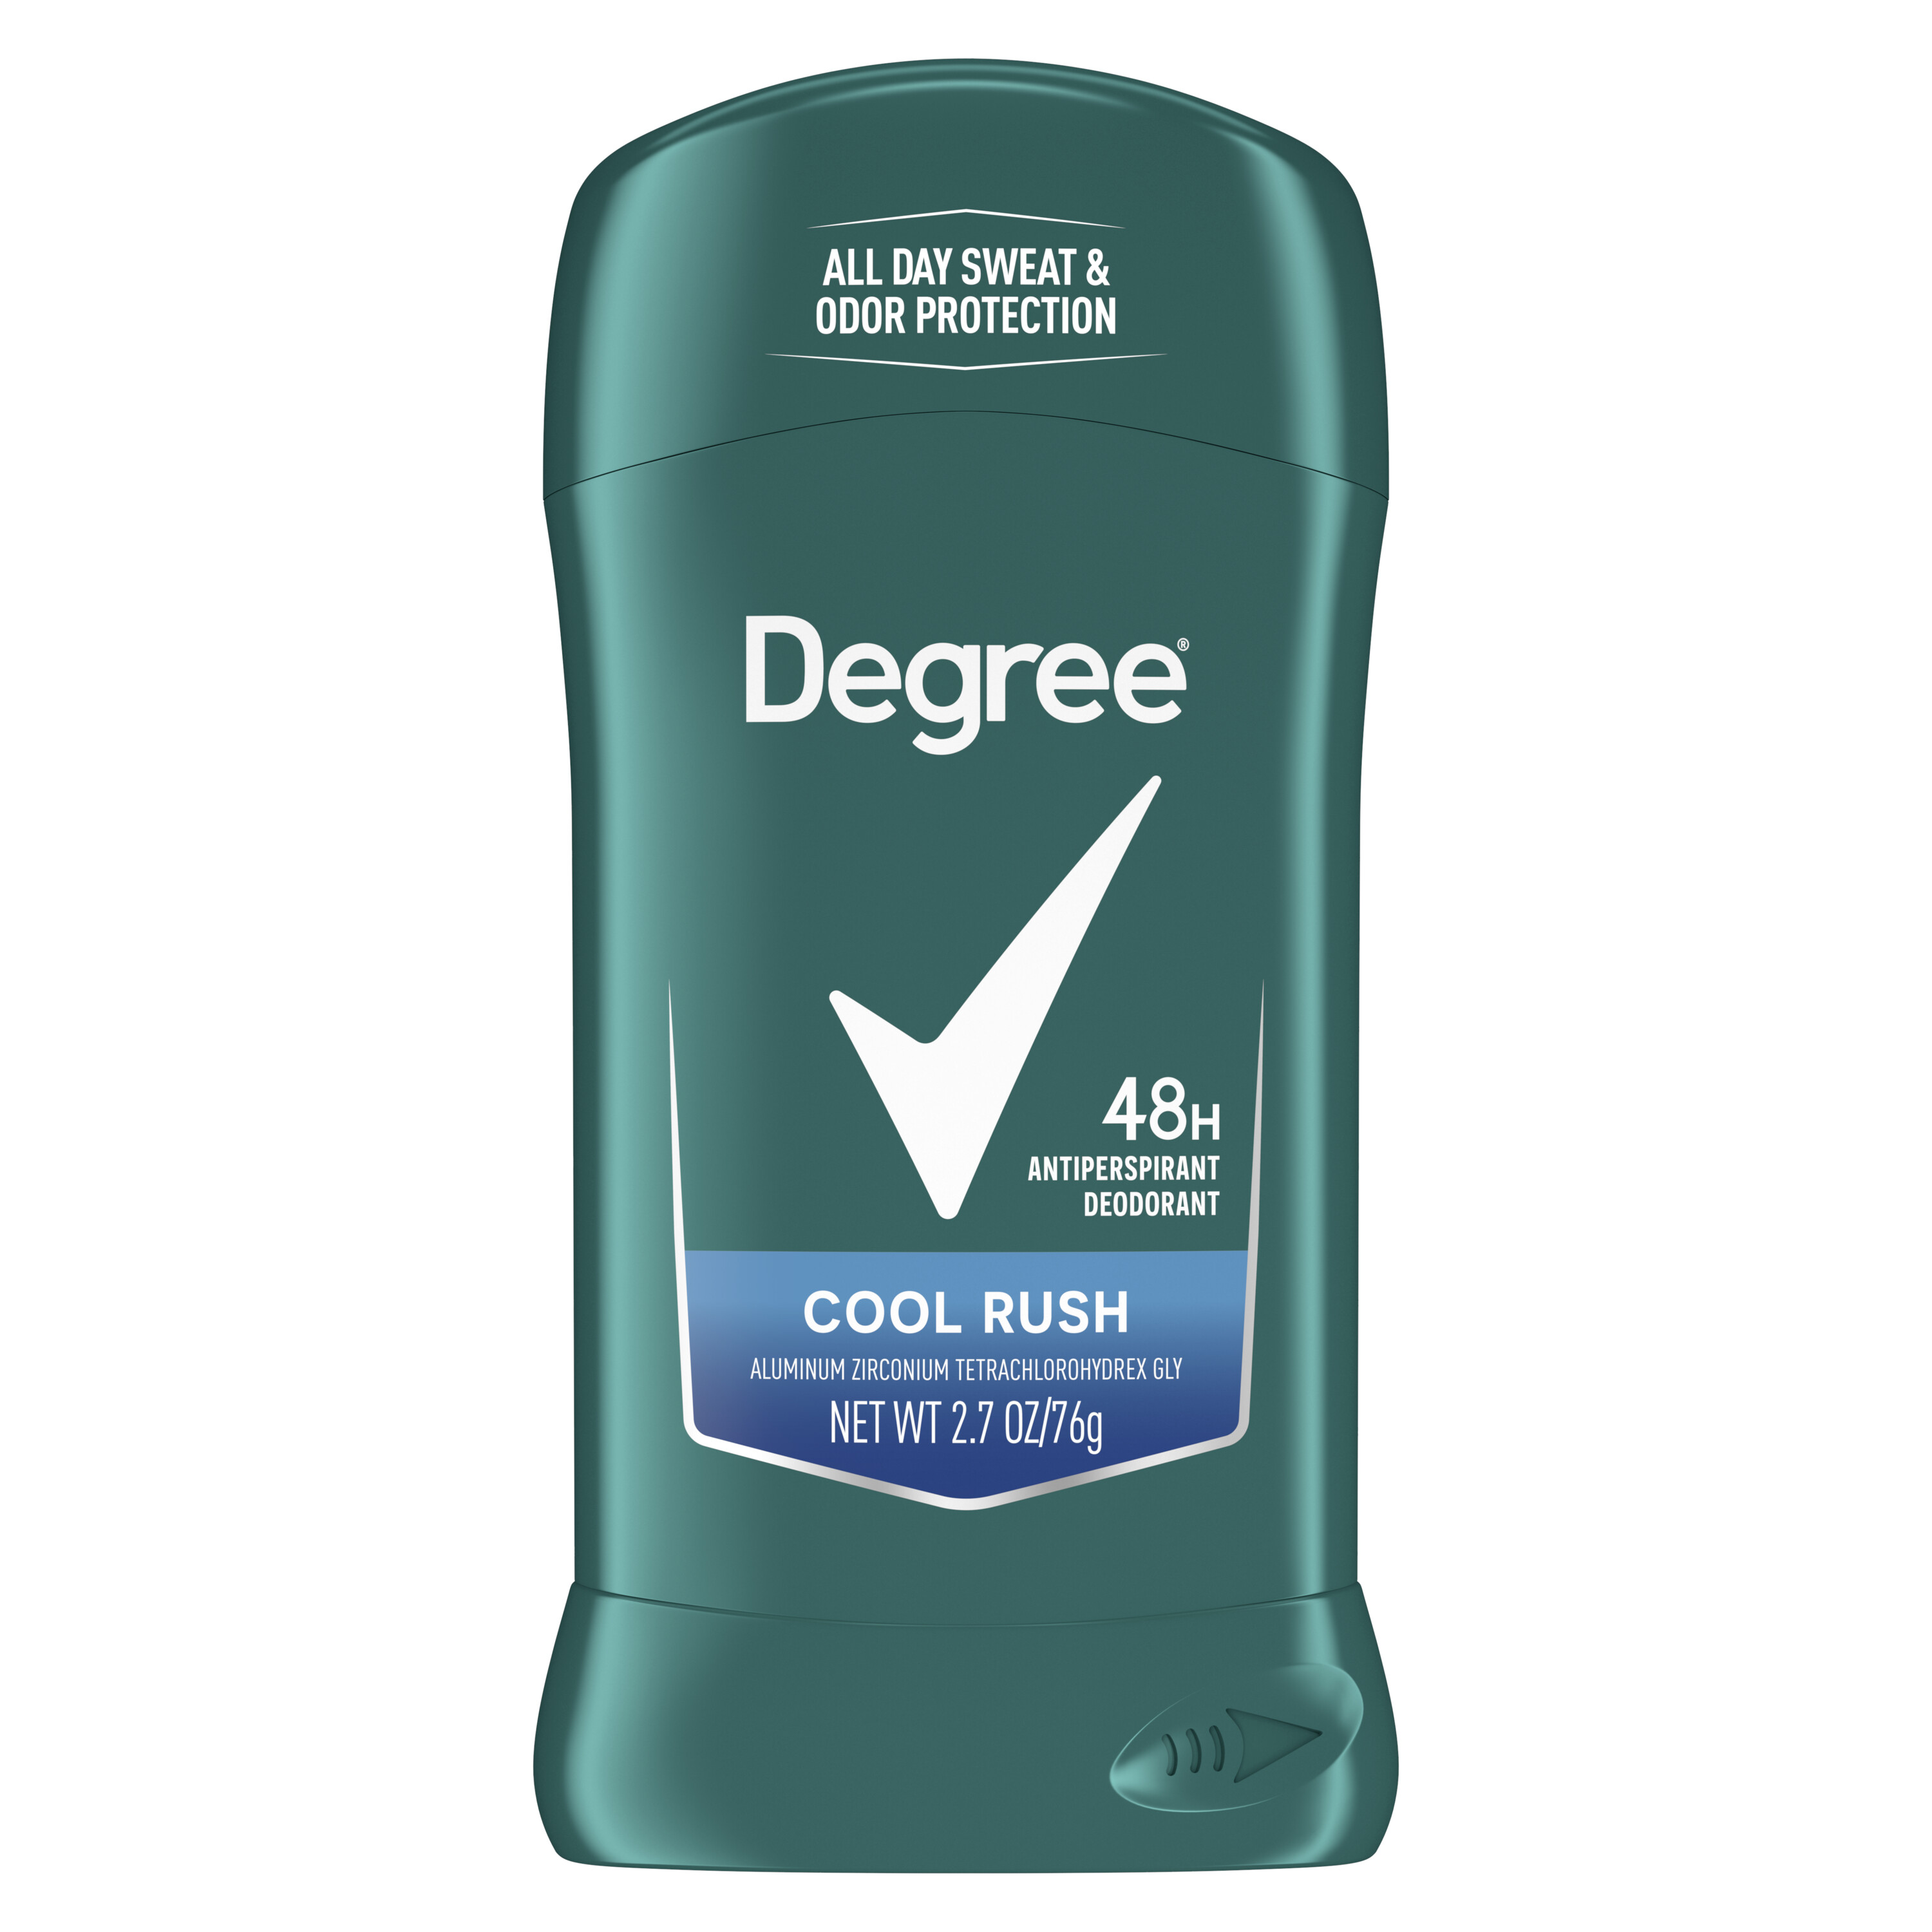 Axe Fine Fragrance Men's Fresh Deodorant Body Spray Black Vanilla, Aluminum Free, 4 oz